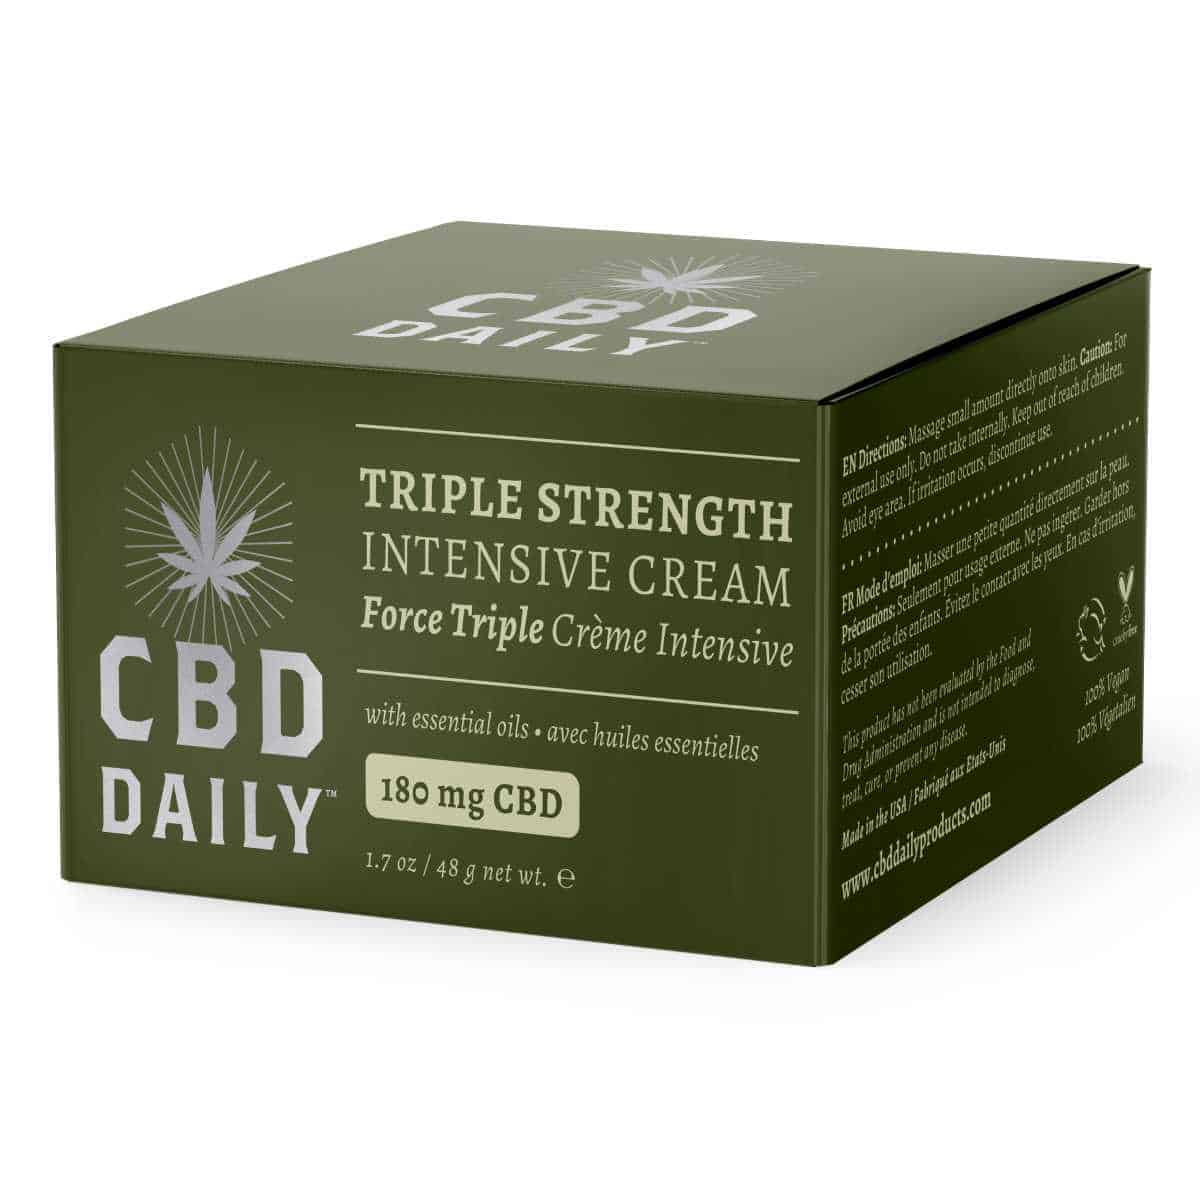 CBD Daily Intensive Cream - Triple Strength - Box | Buy CBD Cream near me | CBD Daily Since 1996